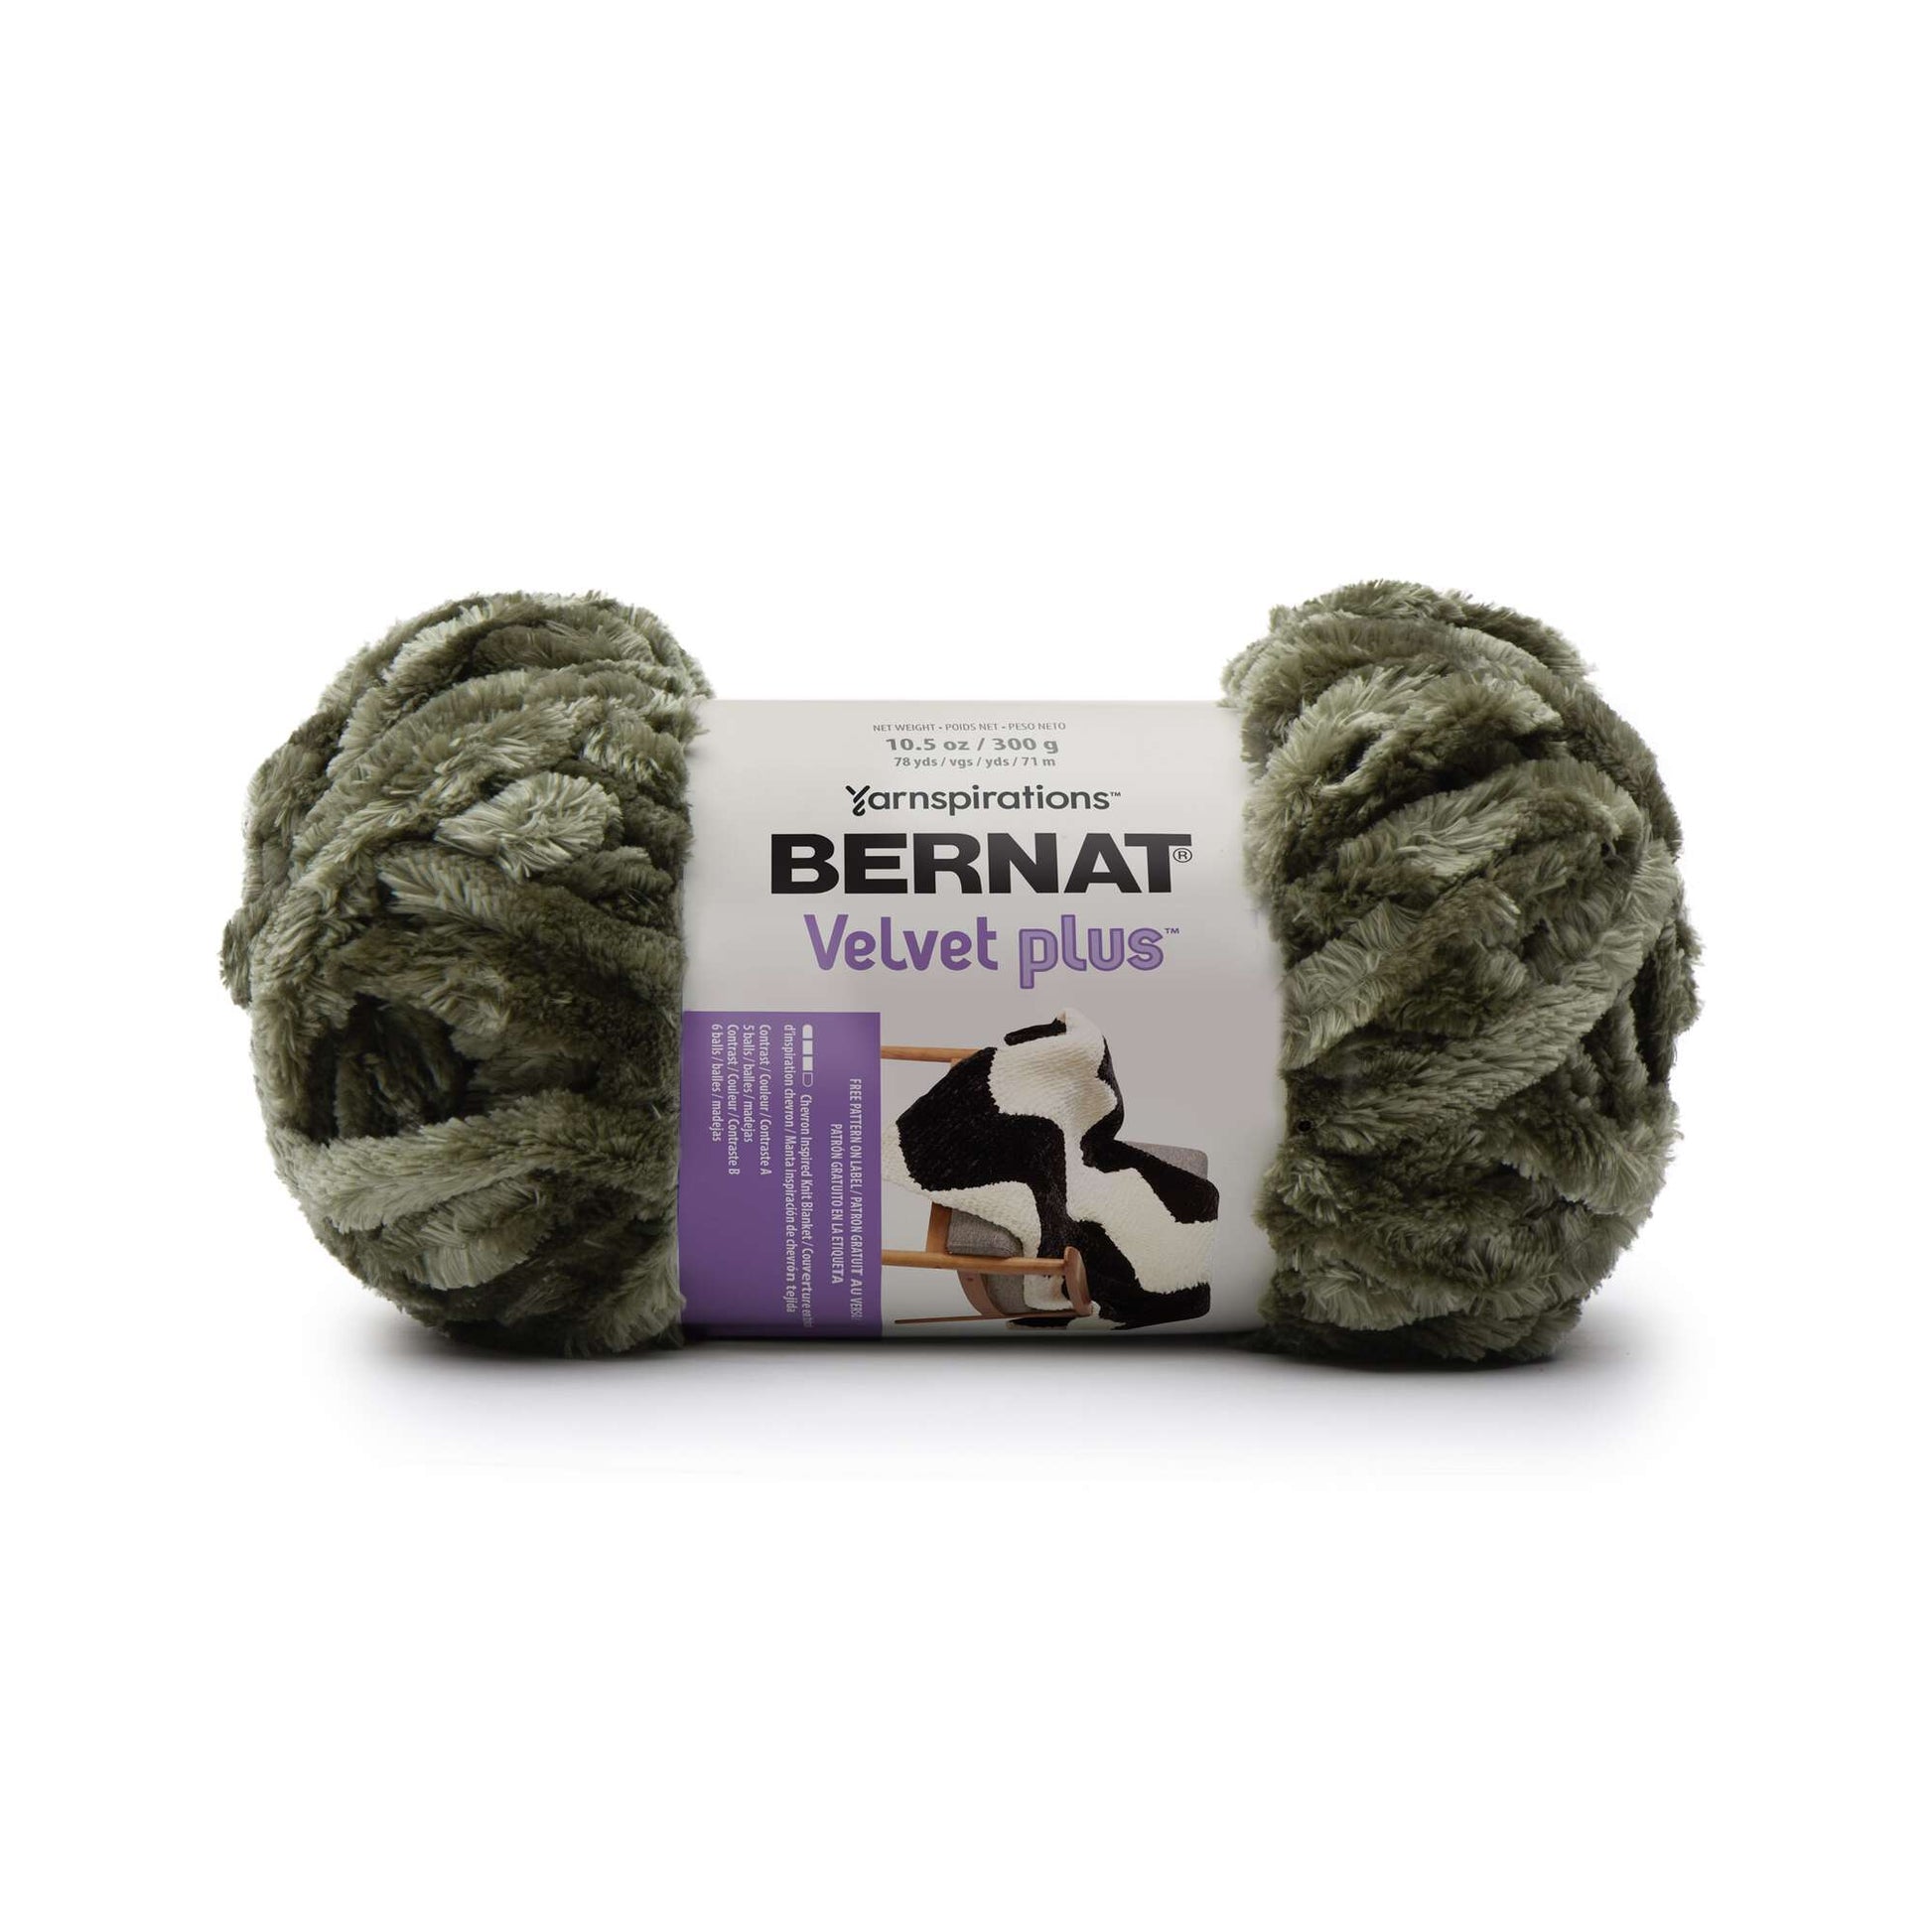 Bernat Velvet Plus Yarn - Discontinued Shades